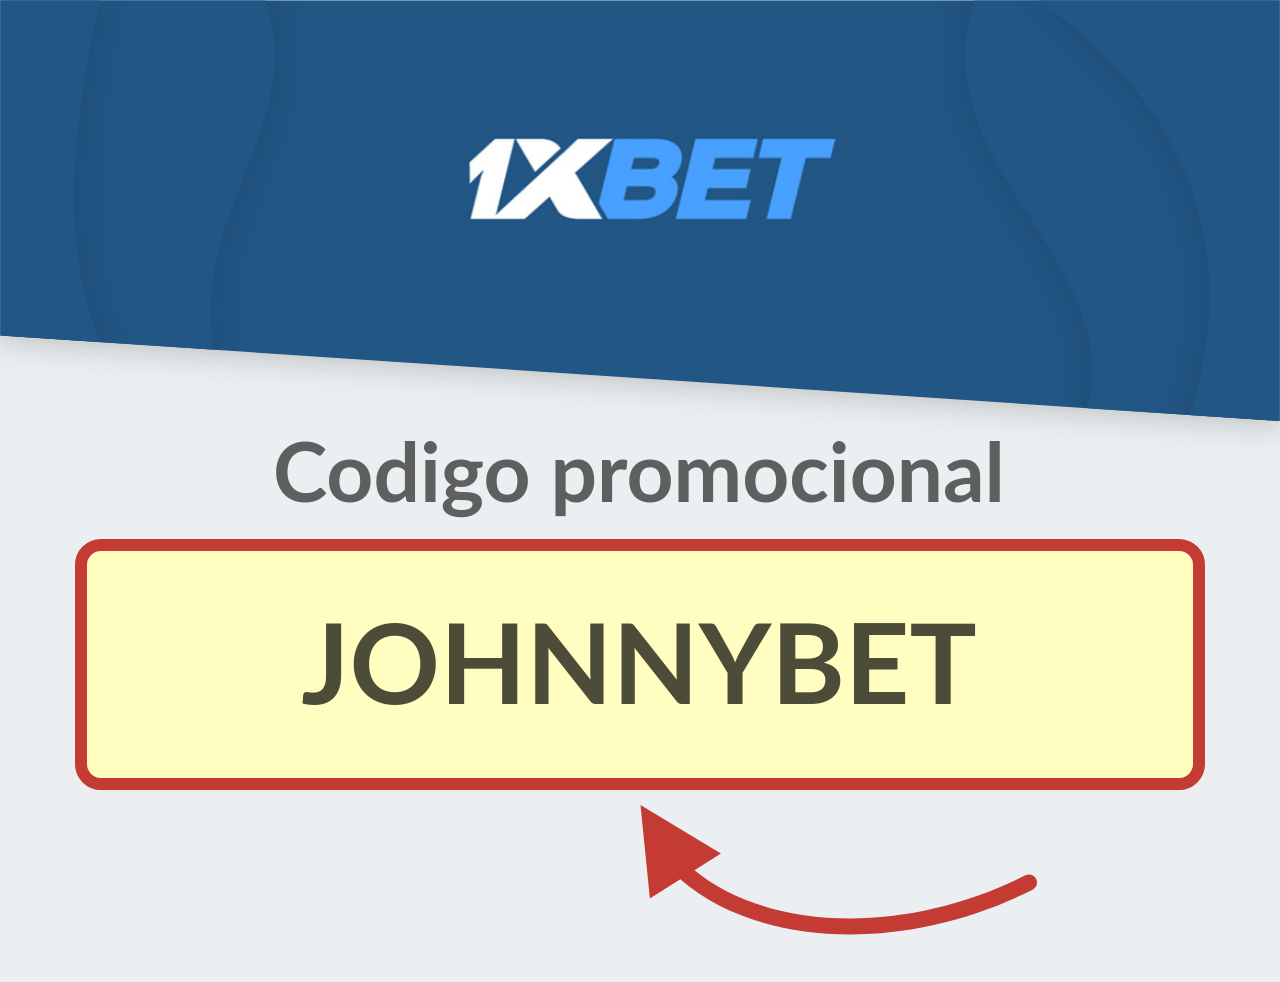 Código Promocional 1XBET Chile: JOHNNYBET